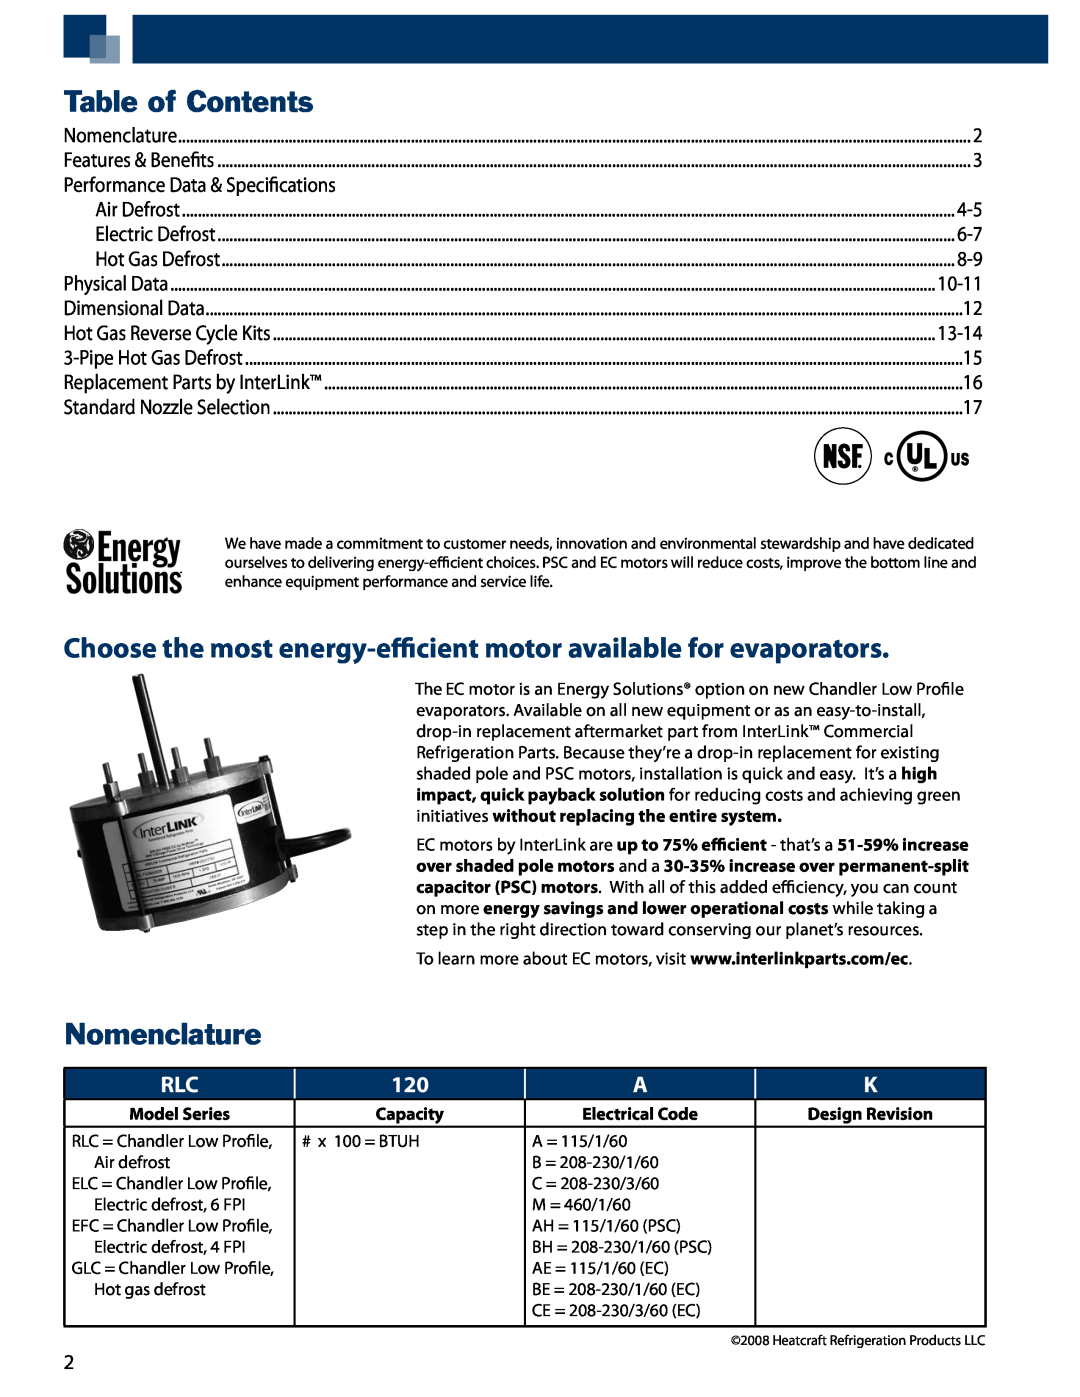 Heatcraft Refrigeration Products ELC/EFC, GLC, RLC manual Table of Contents, Nomenclature 